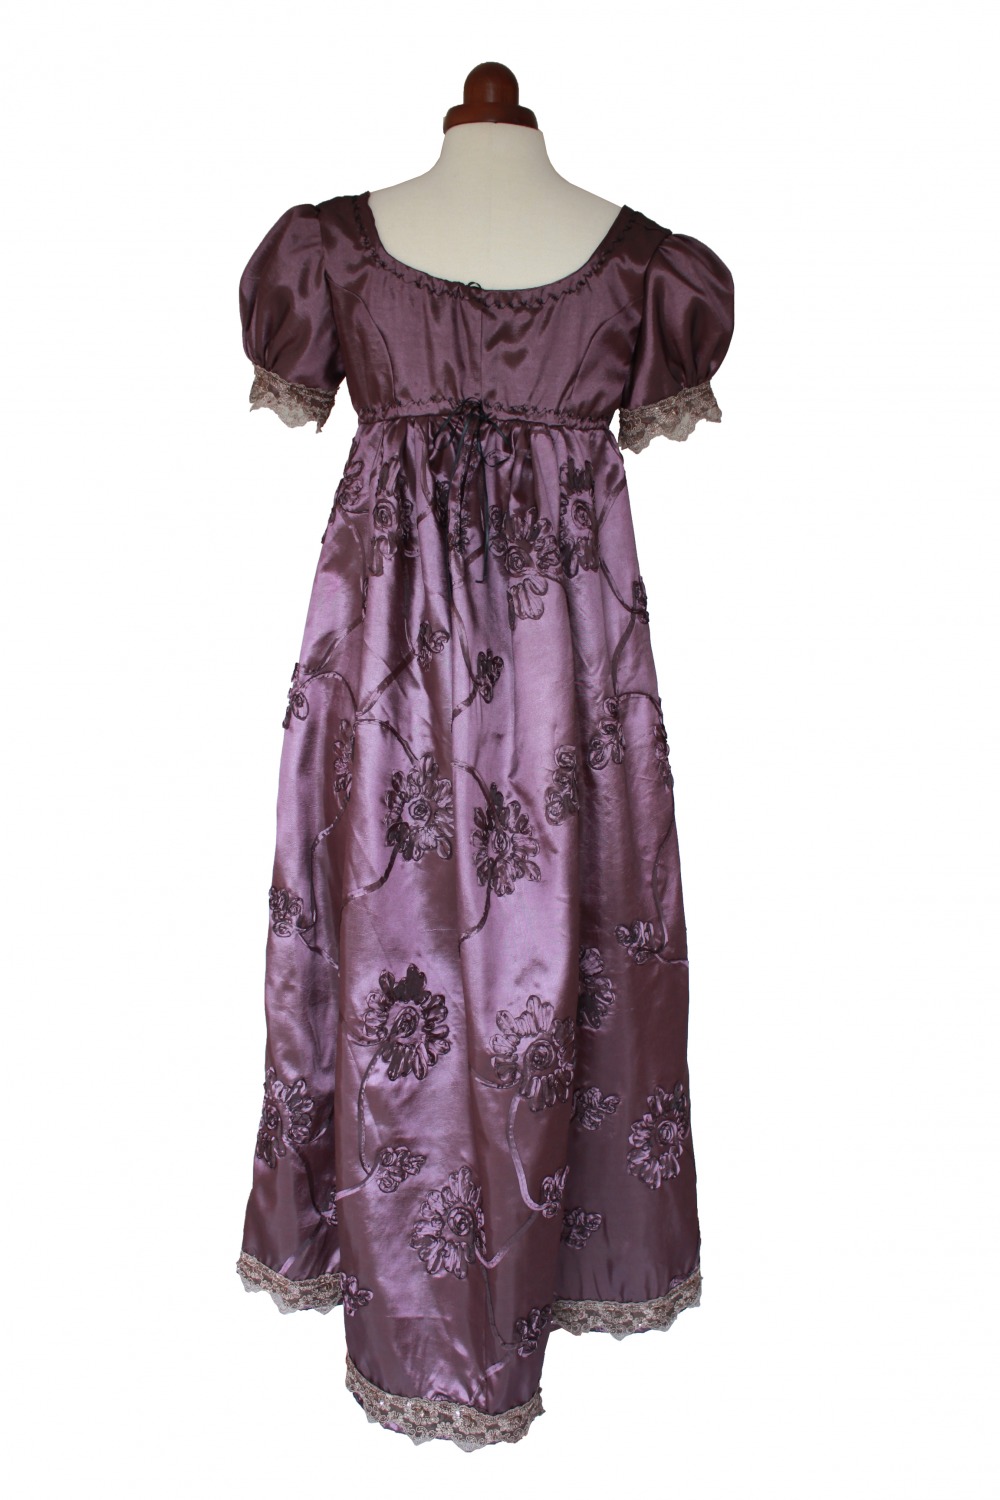 Ladies 18th 19th Regency Jane Austen Costume Evening Ball Gown Petite Size 8 - 10 Image